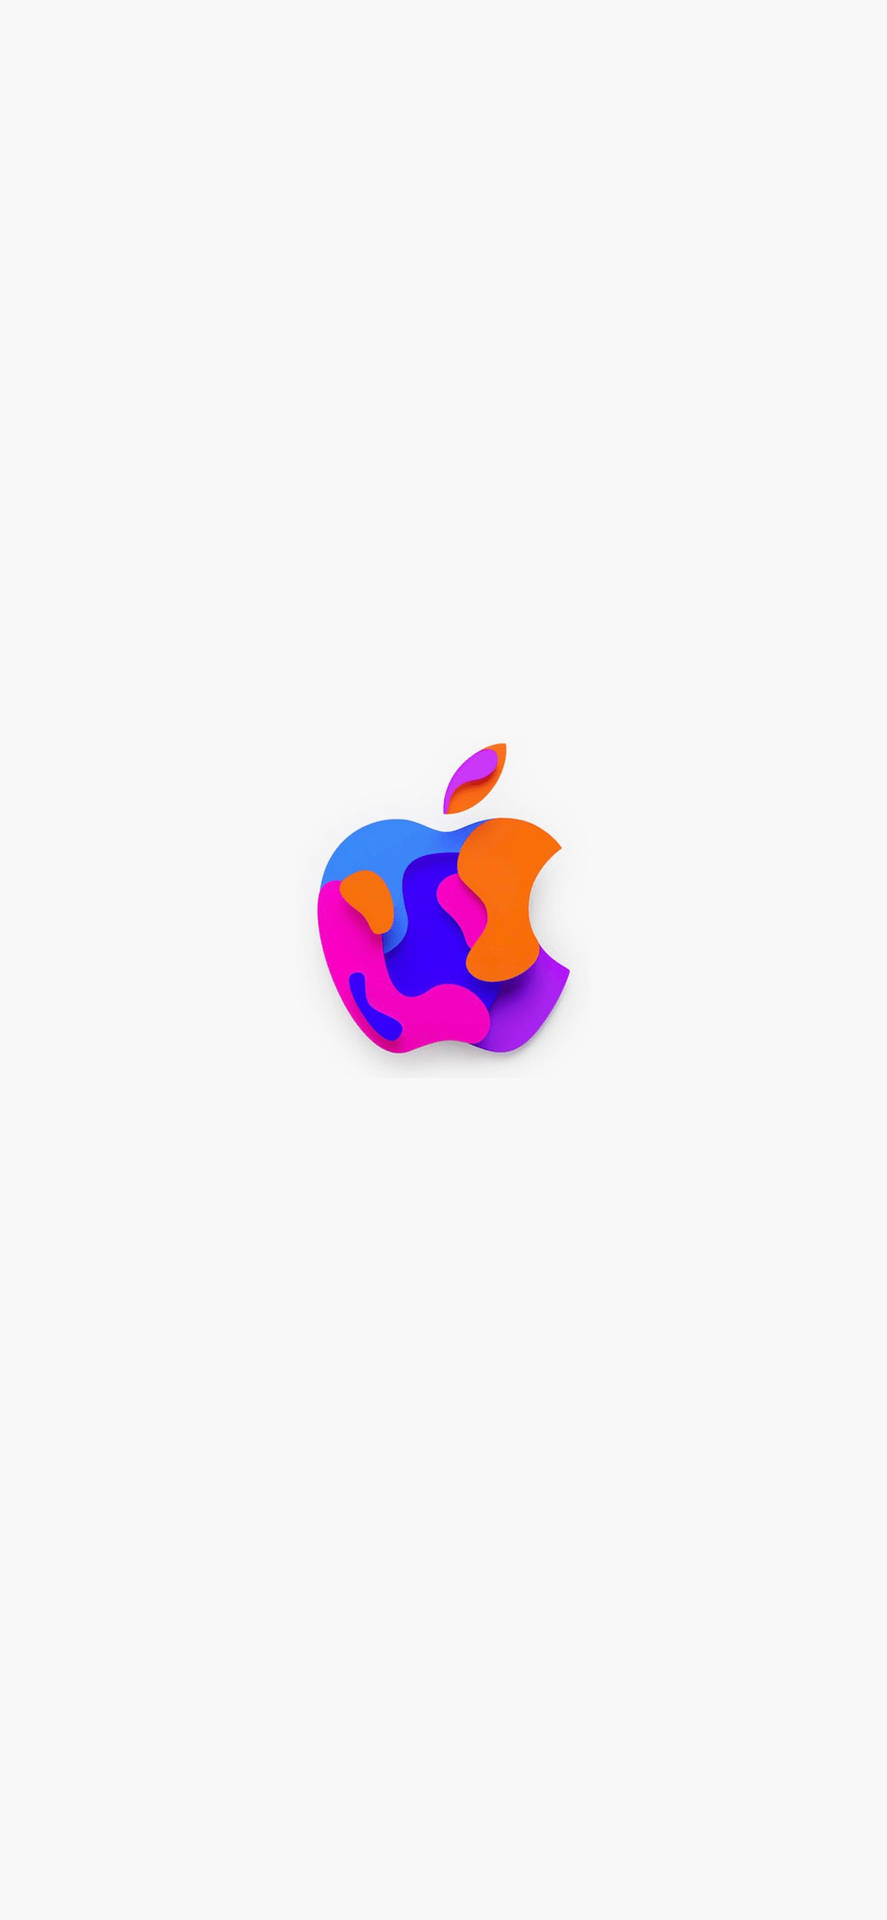 Levende Apple Logo Iphone Wallpaper